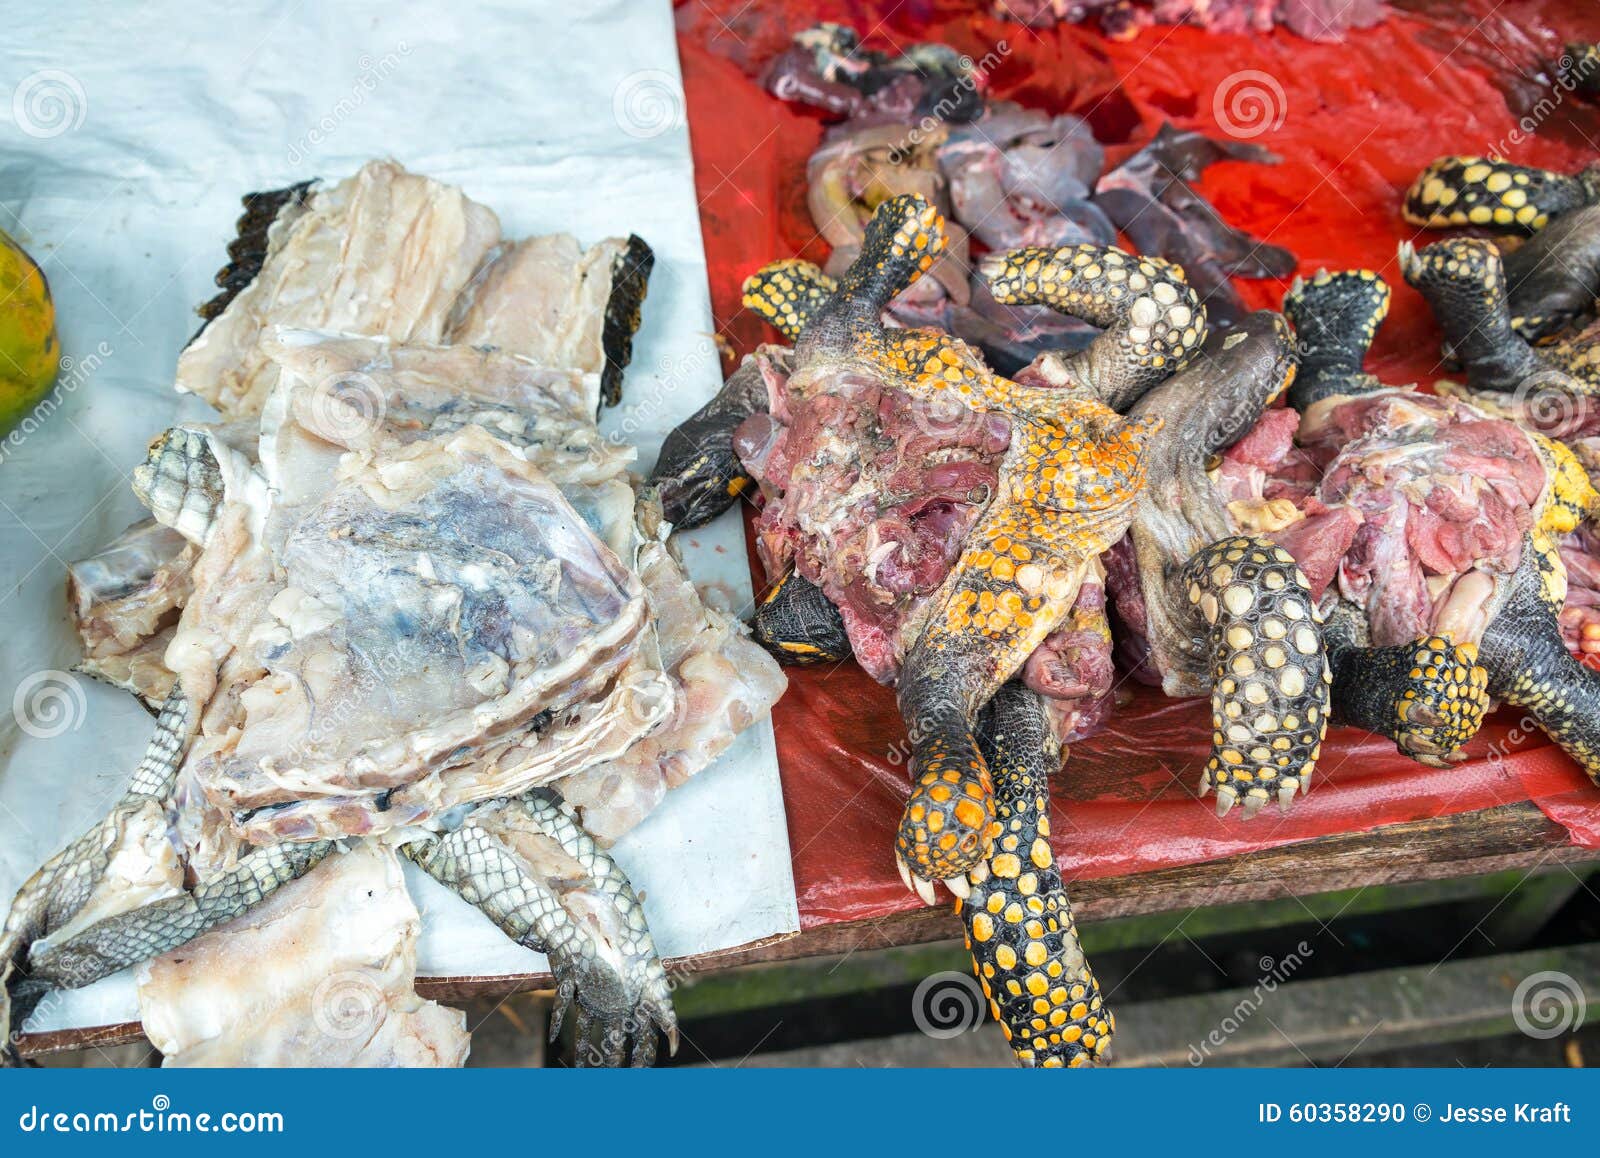 turtle meat in a market in iquitos, peru